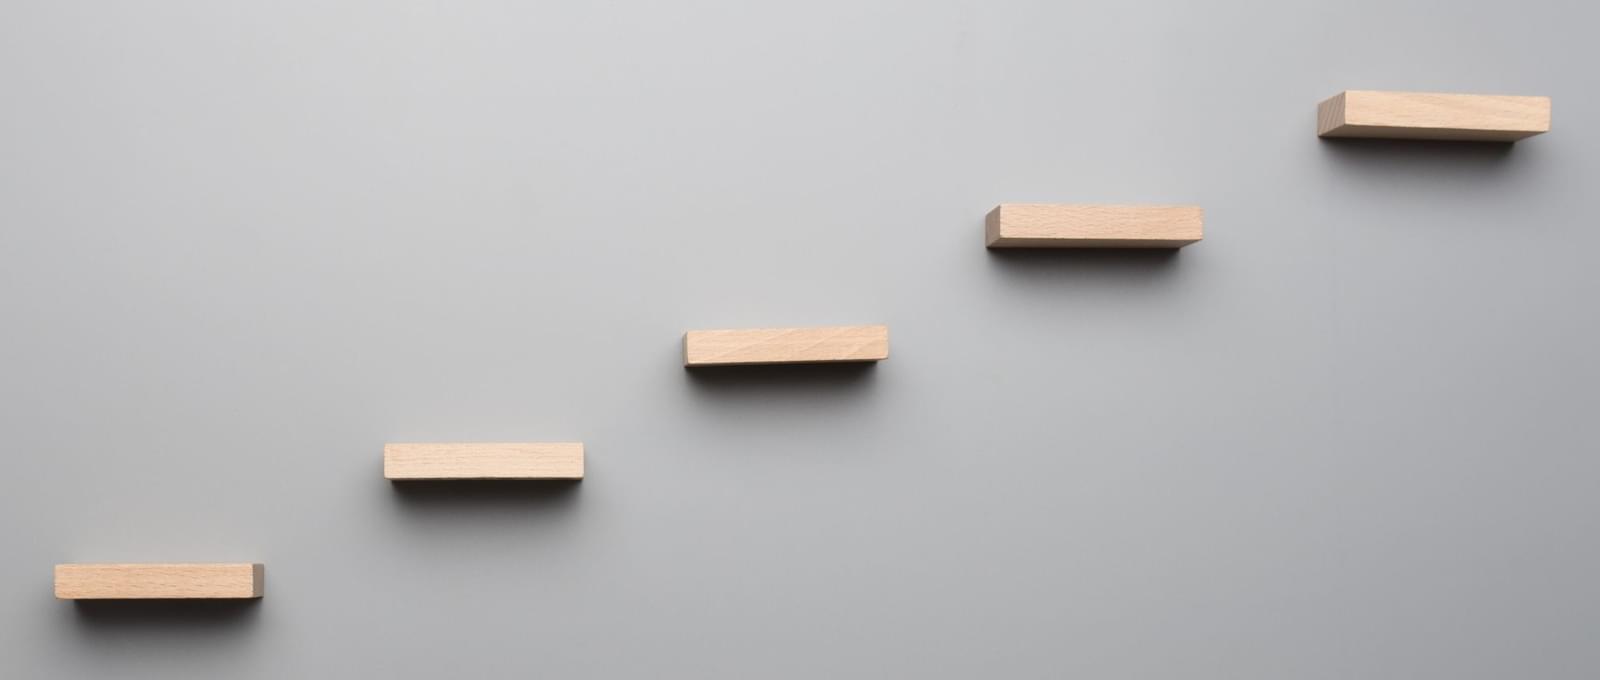 Wooden steps on a grey background banner image